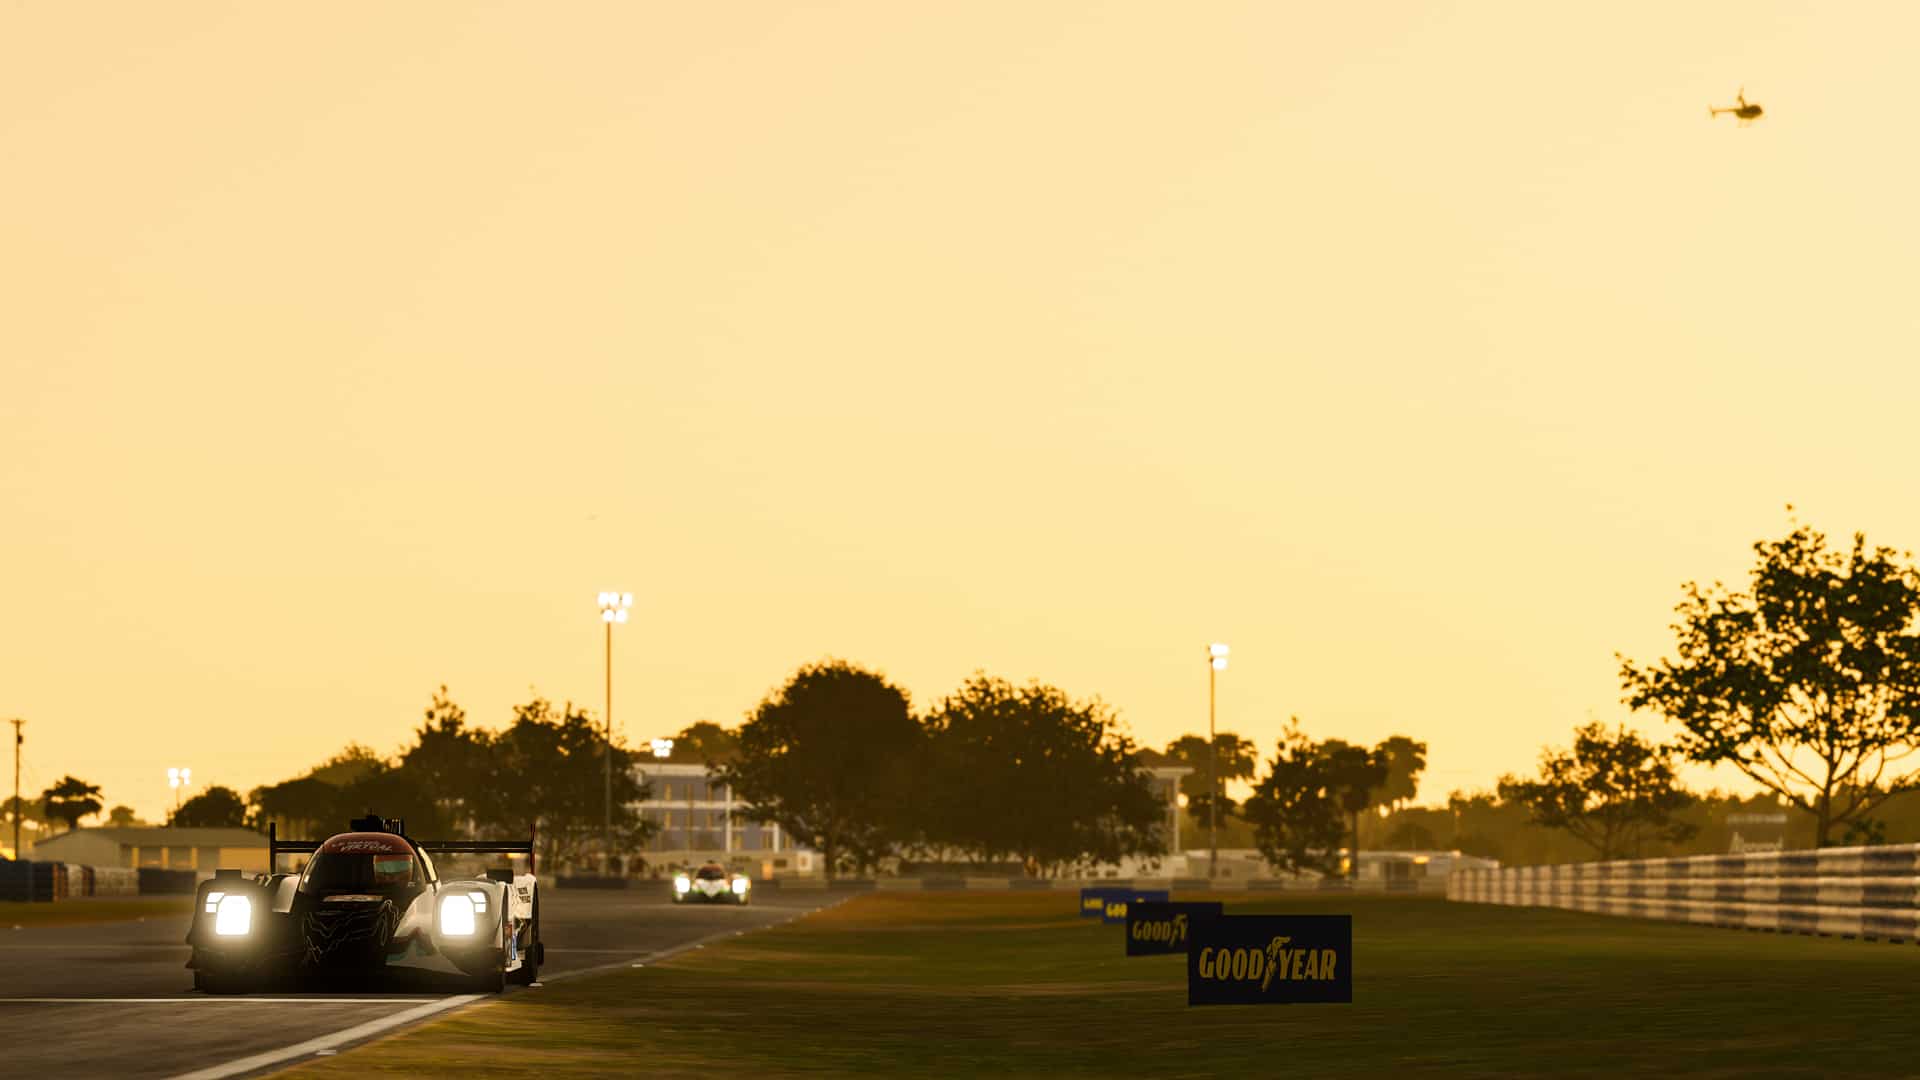 R8G fastest, R8G fastest, but Porsche Coanda takes Le Mans Virtual Series pole at Sebringbut Porsche Coanda takes Le Mans Virtual Series pole at Sebring